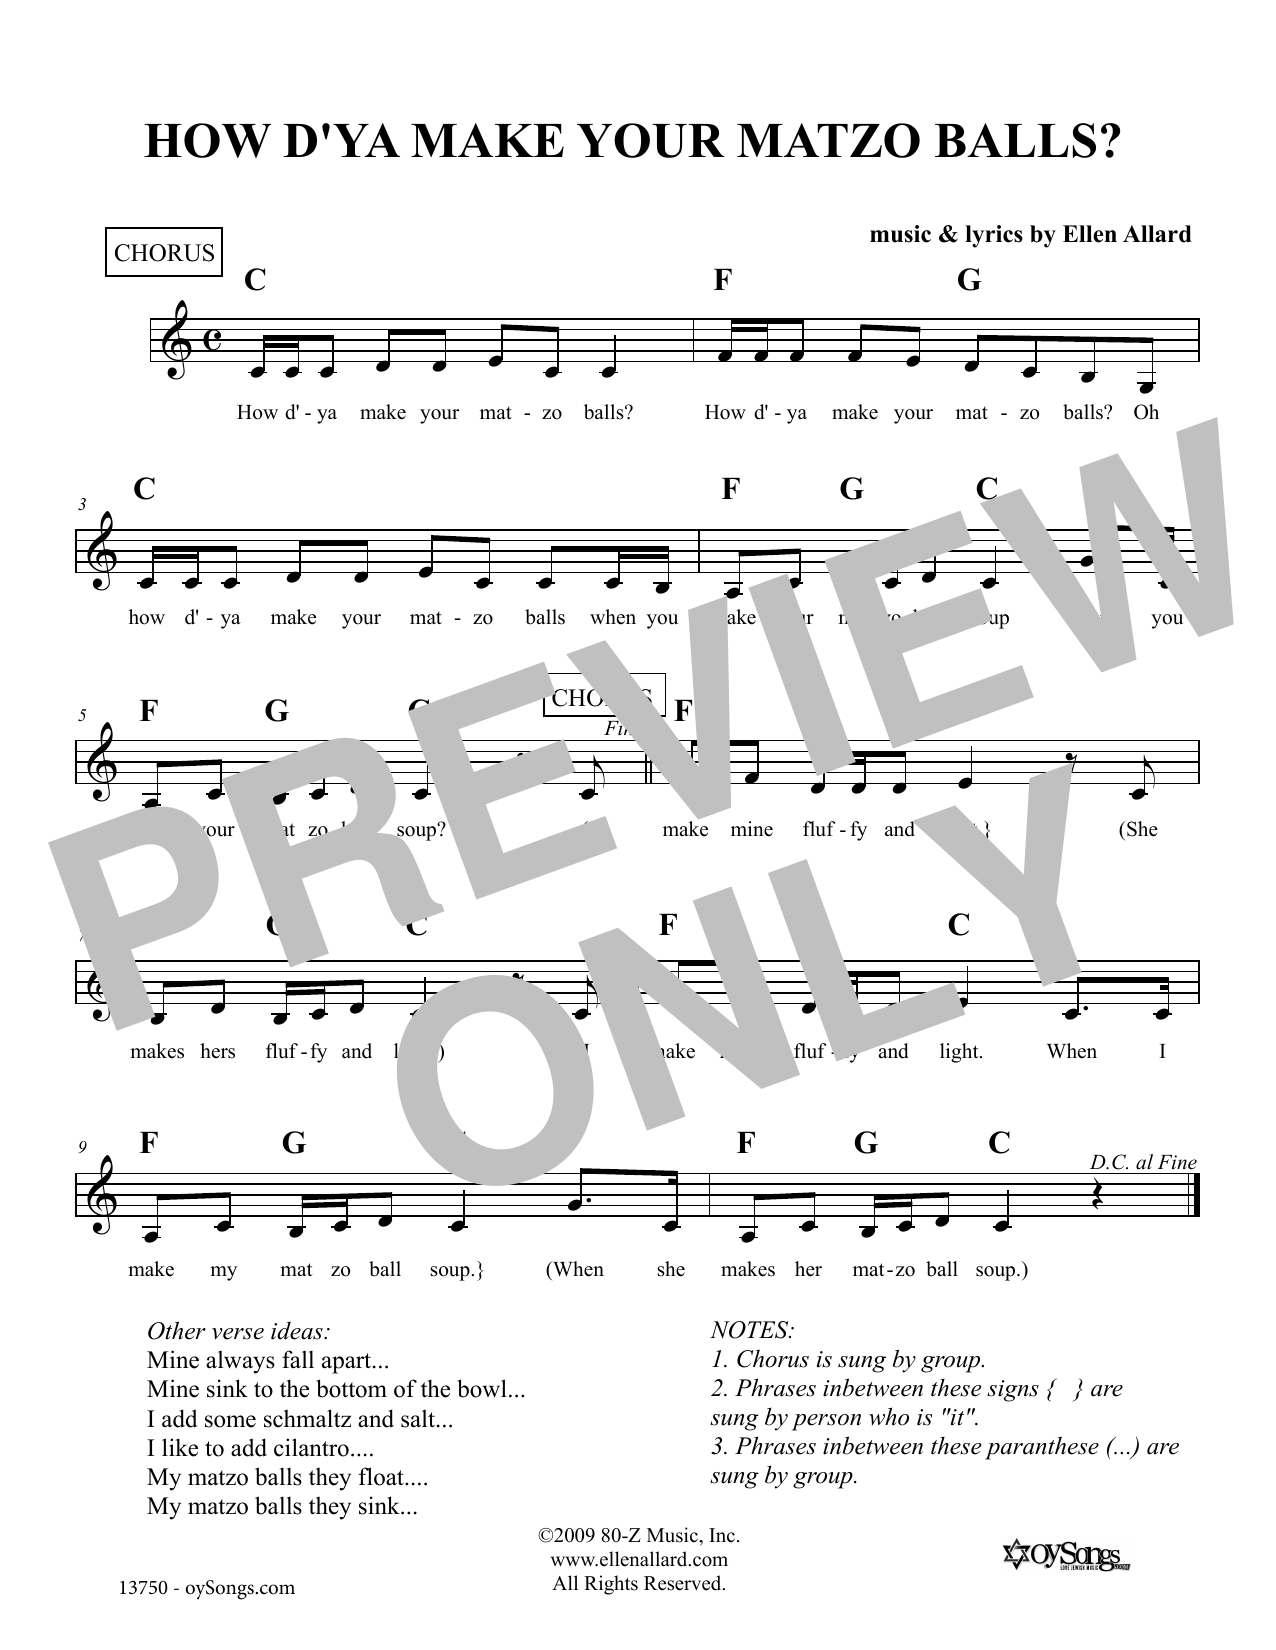 Ellen Allard How Do You Make Your Matzo Balls Sheet Music Notes & Chords for Melody Line, Lyrics & Chords - Download or Print PDF